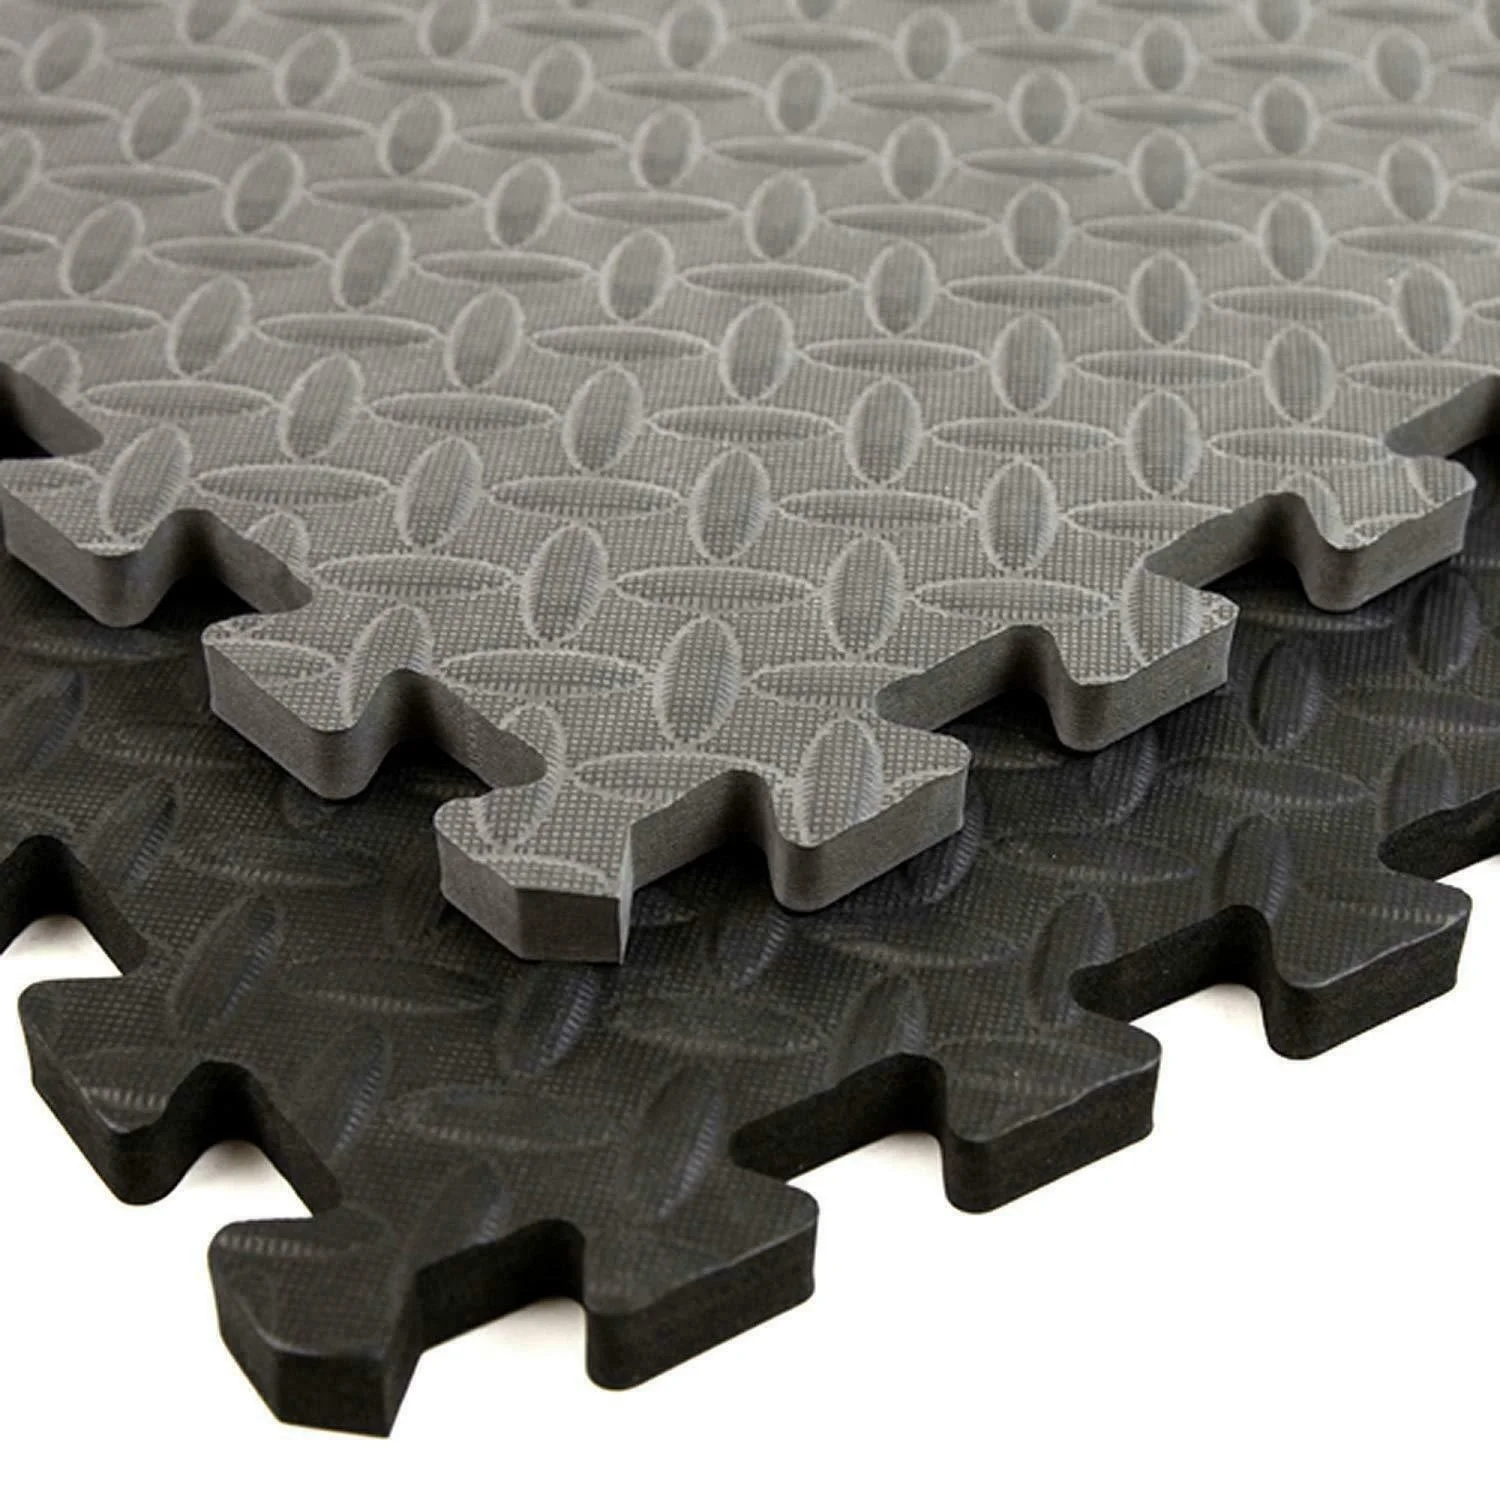 Interlocking Eva Floor Foam Mats Soft Gym Mat Exercise Garage House Office Tiles 